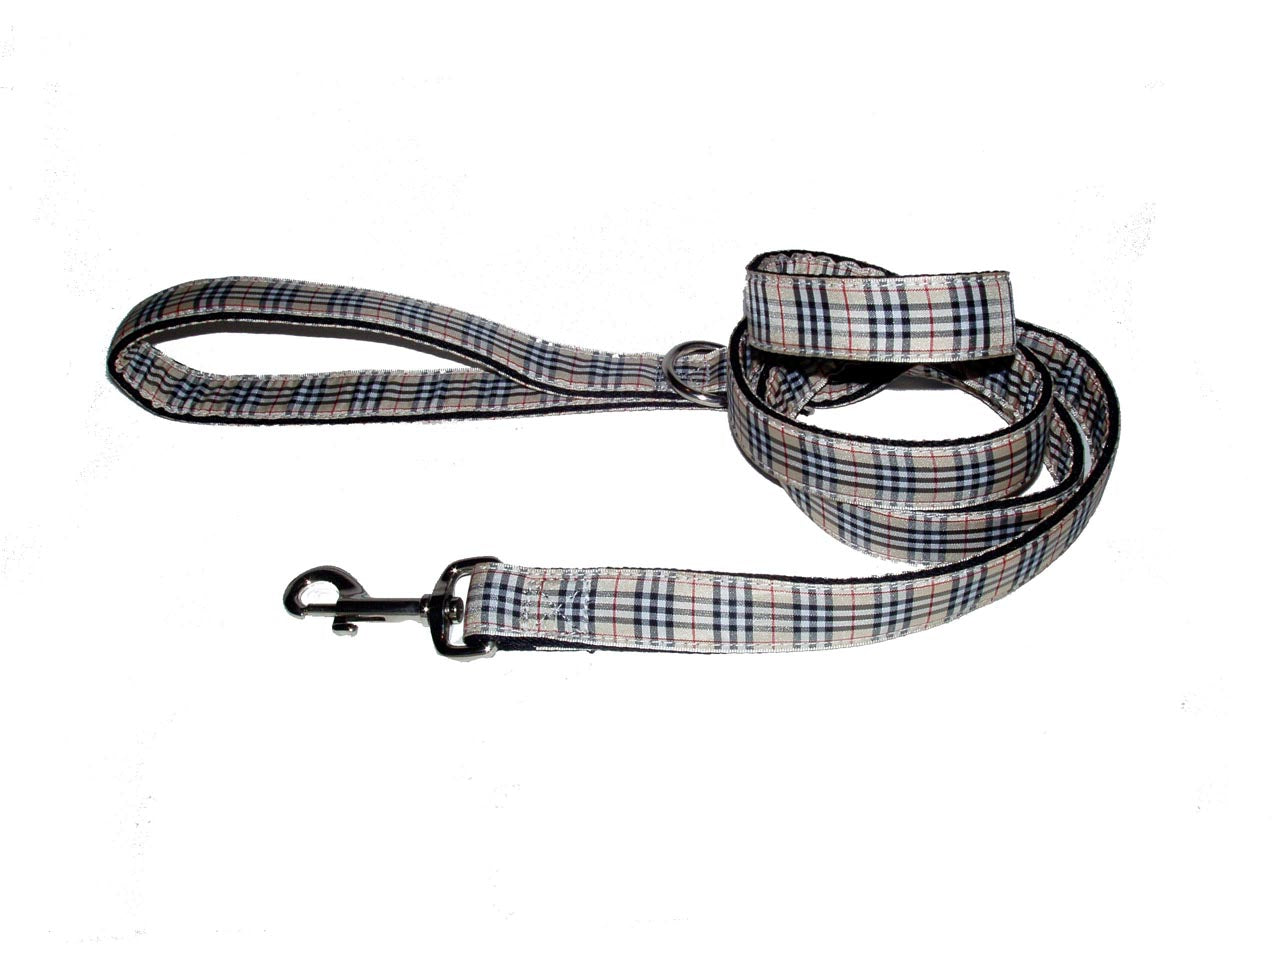 Ribbon 5 ft Leashes-Tailored Tan Plaid - A Pet's World